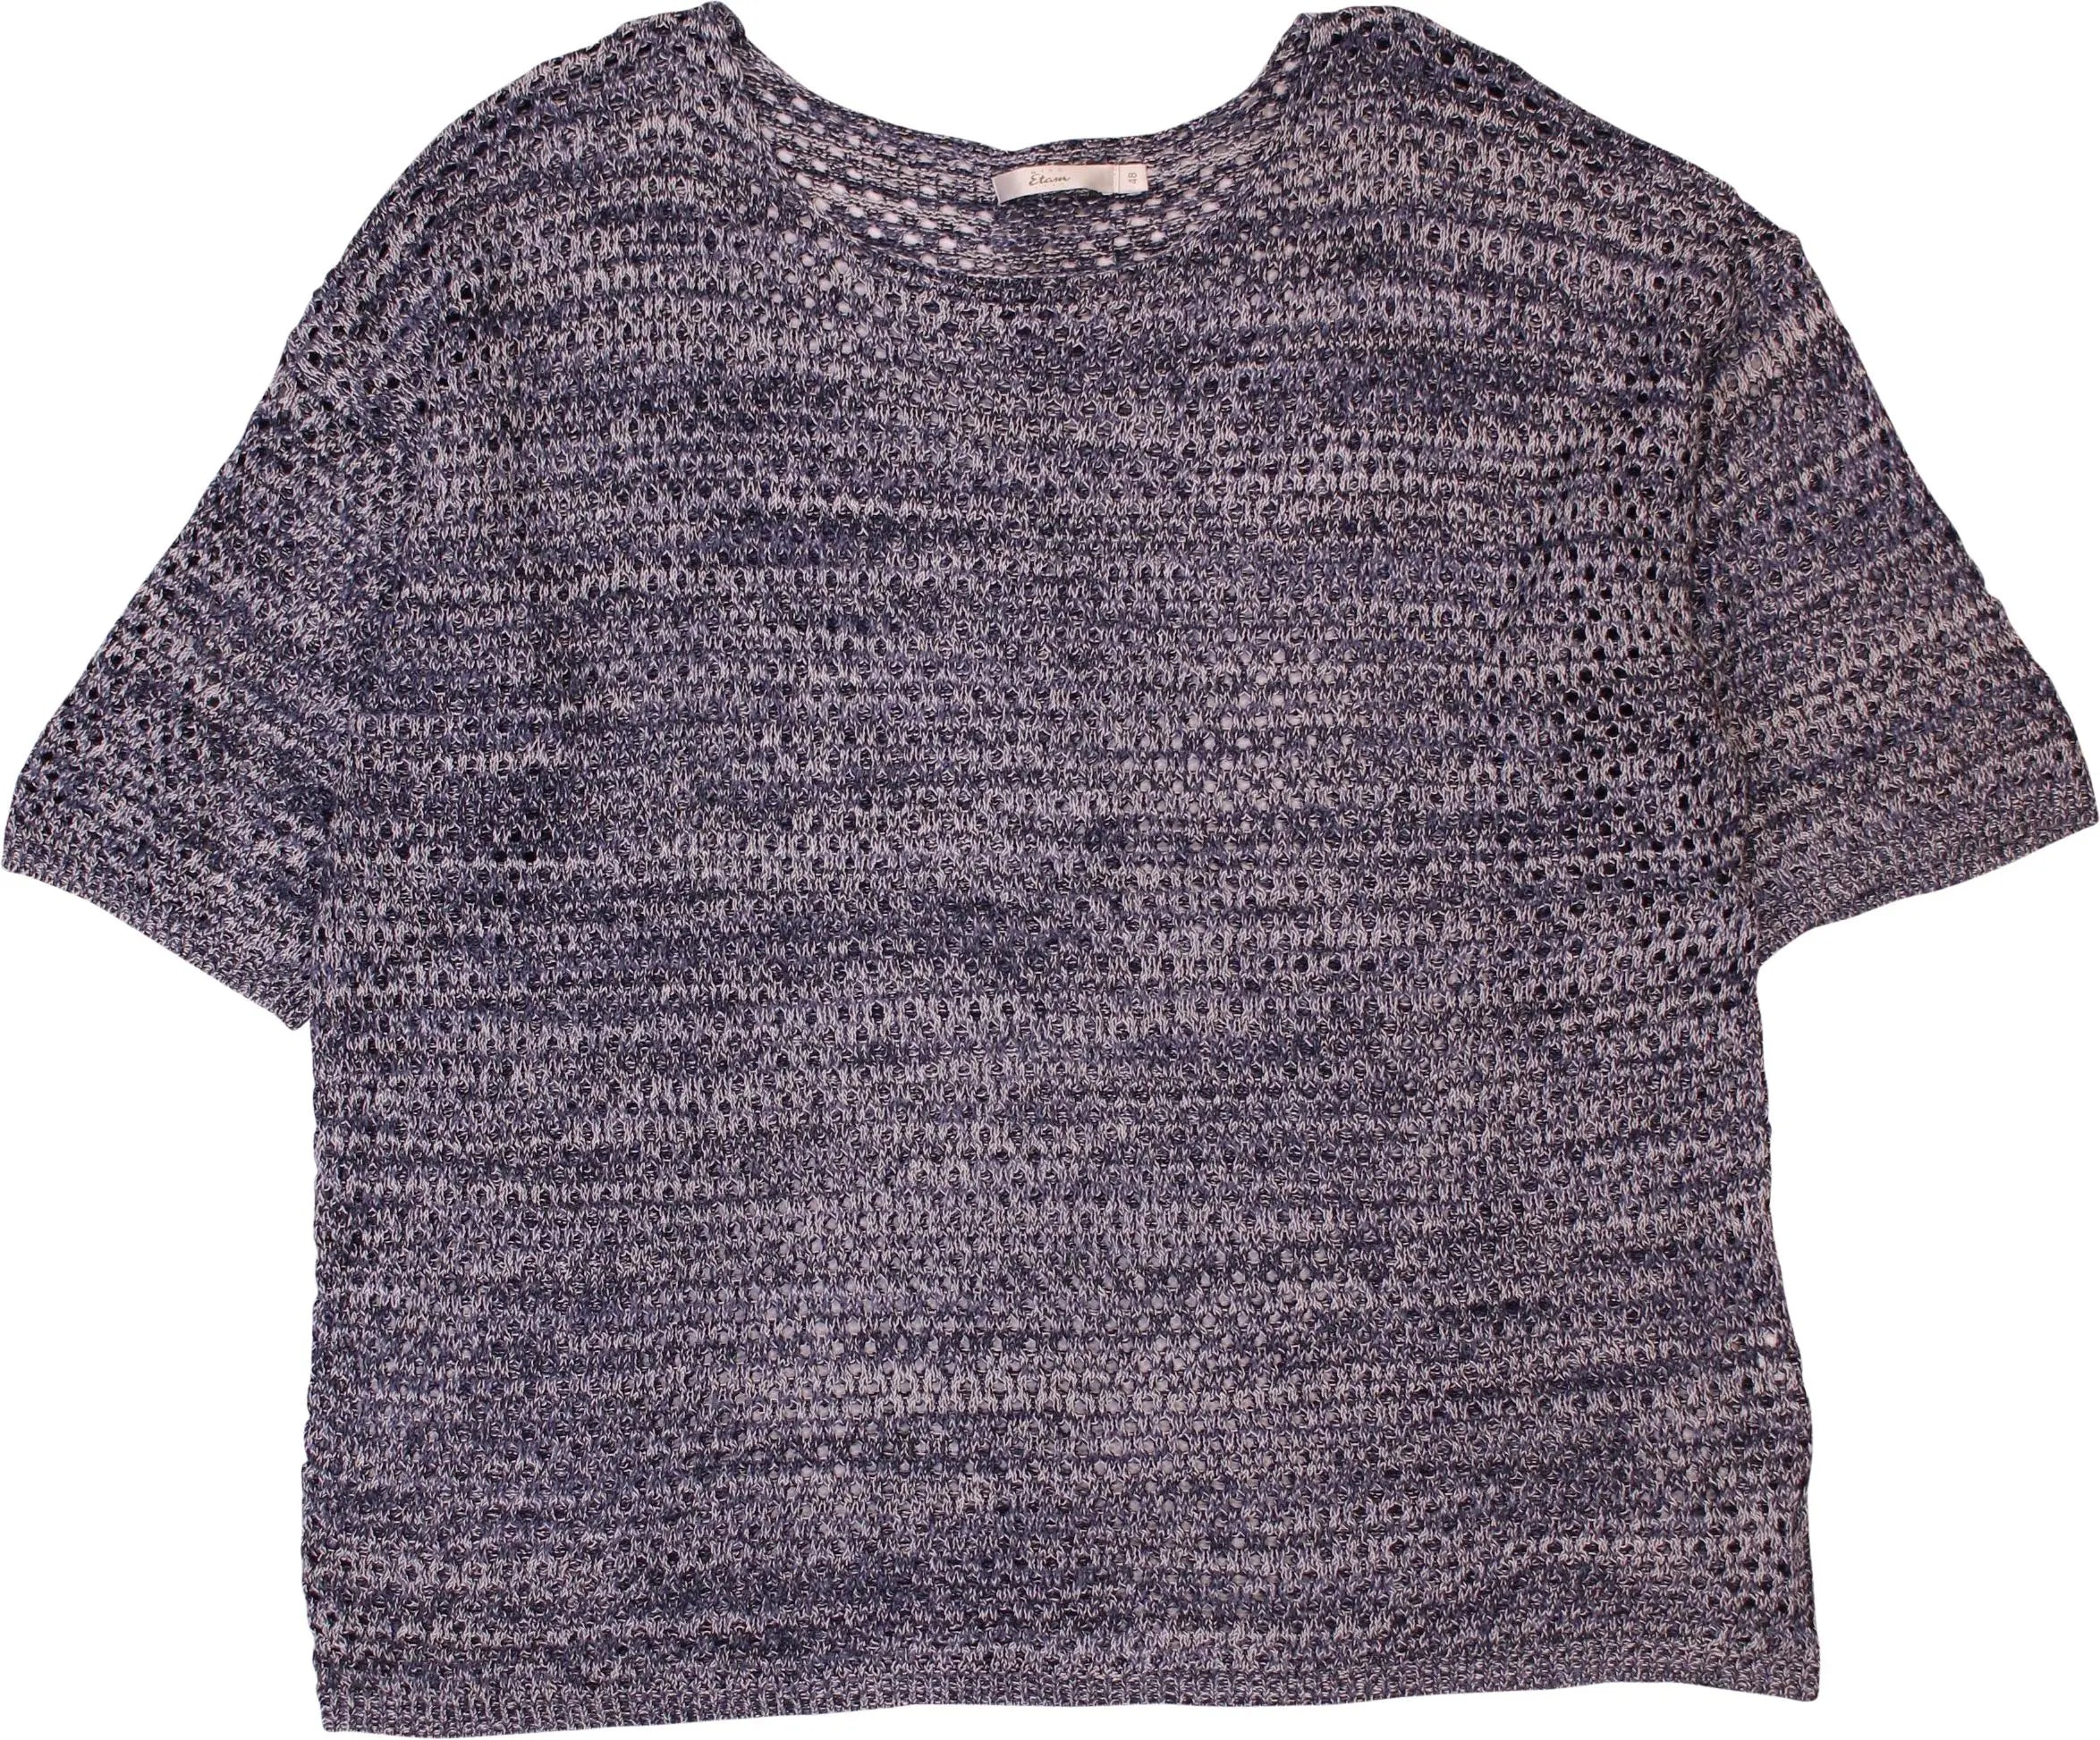 Miss Etam - Crochet Top- ThriftTale.com - Vintage and second handclothing